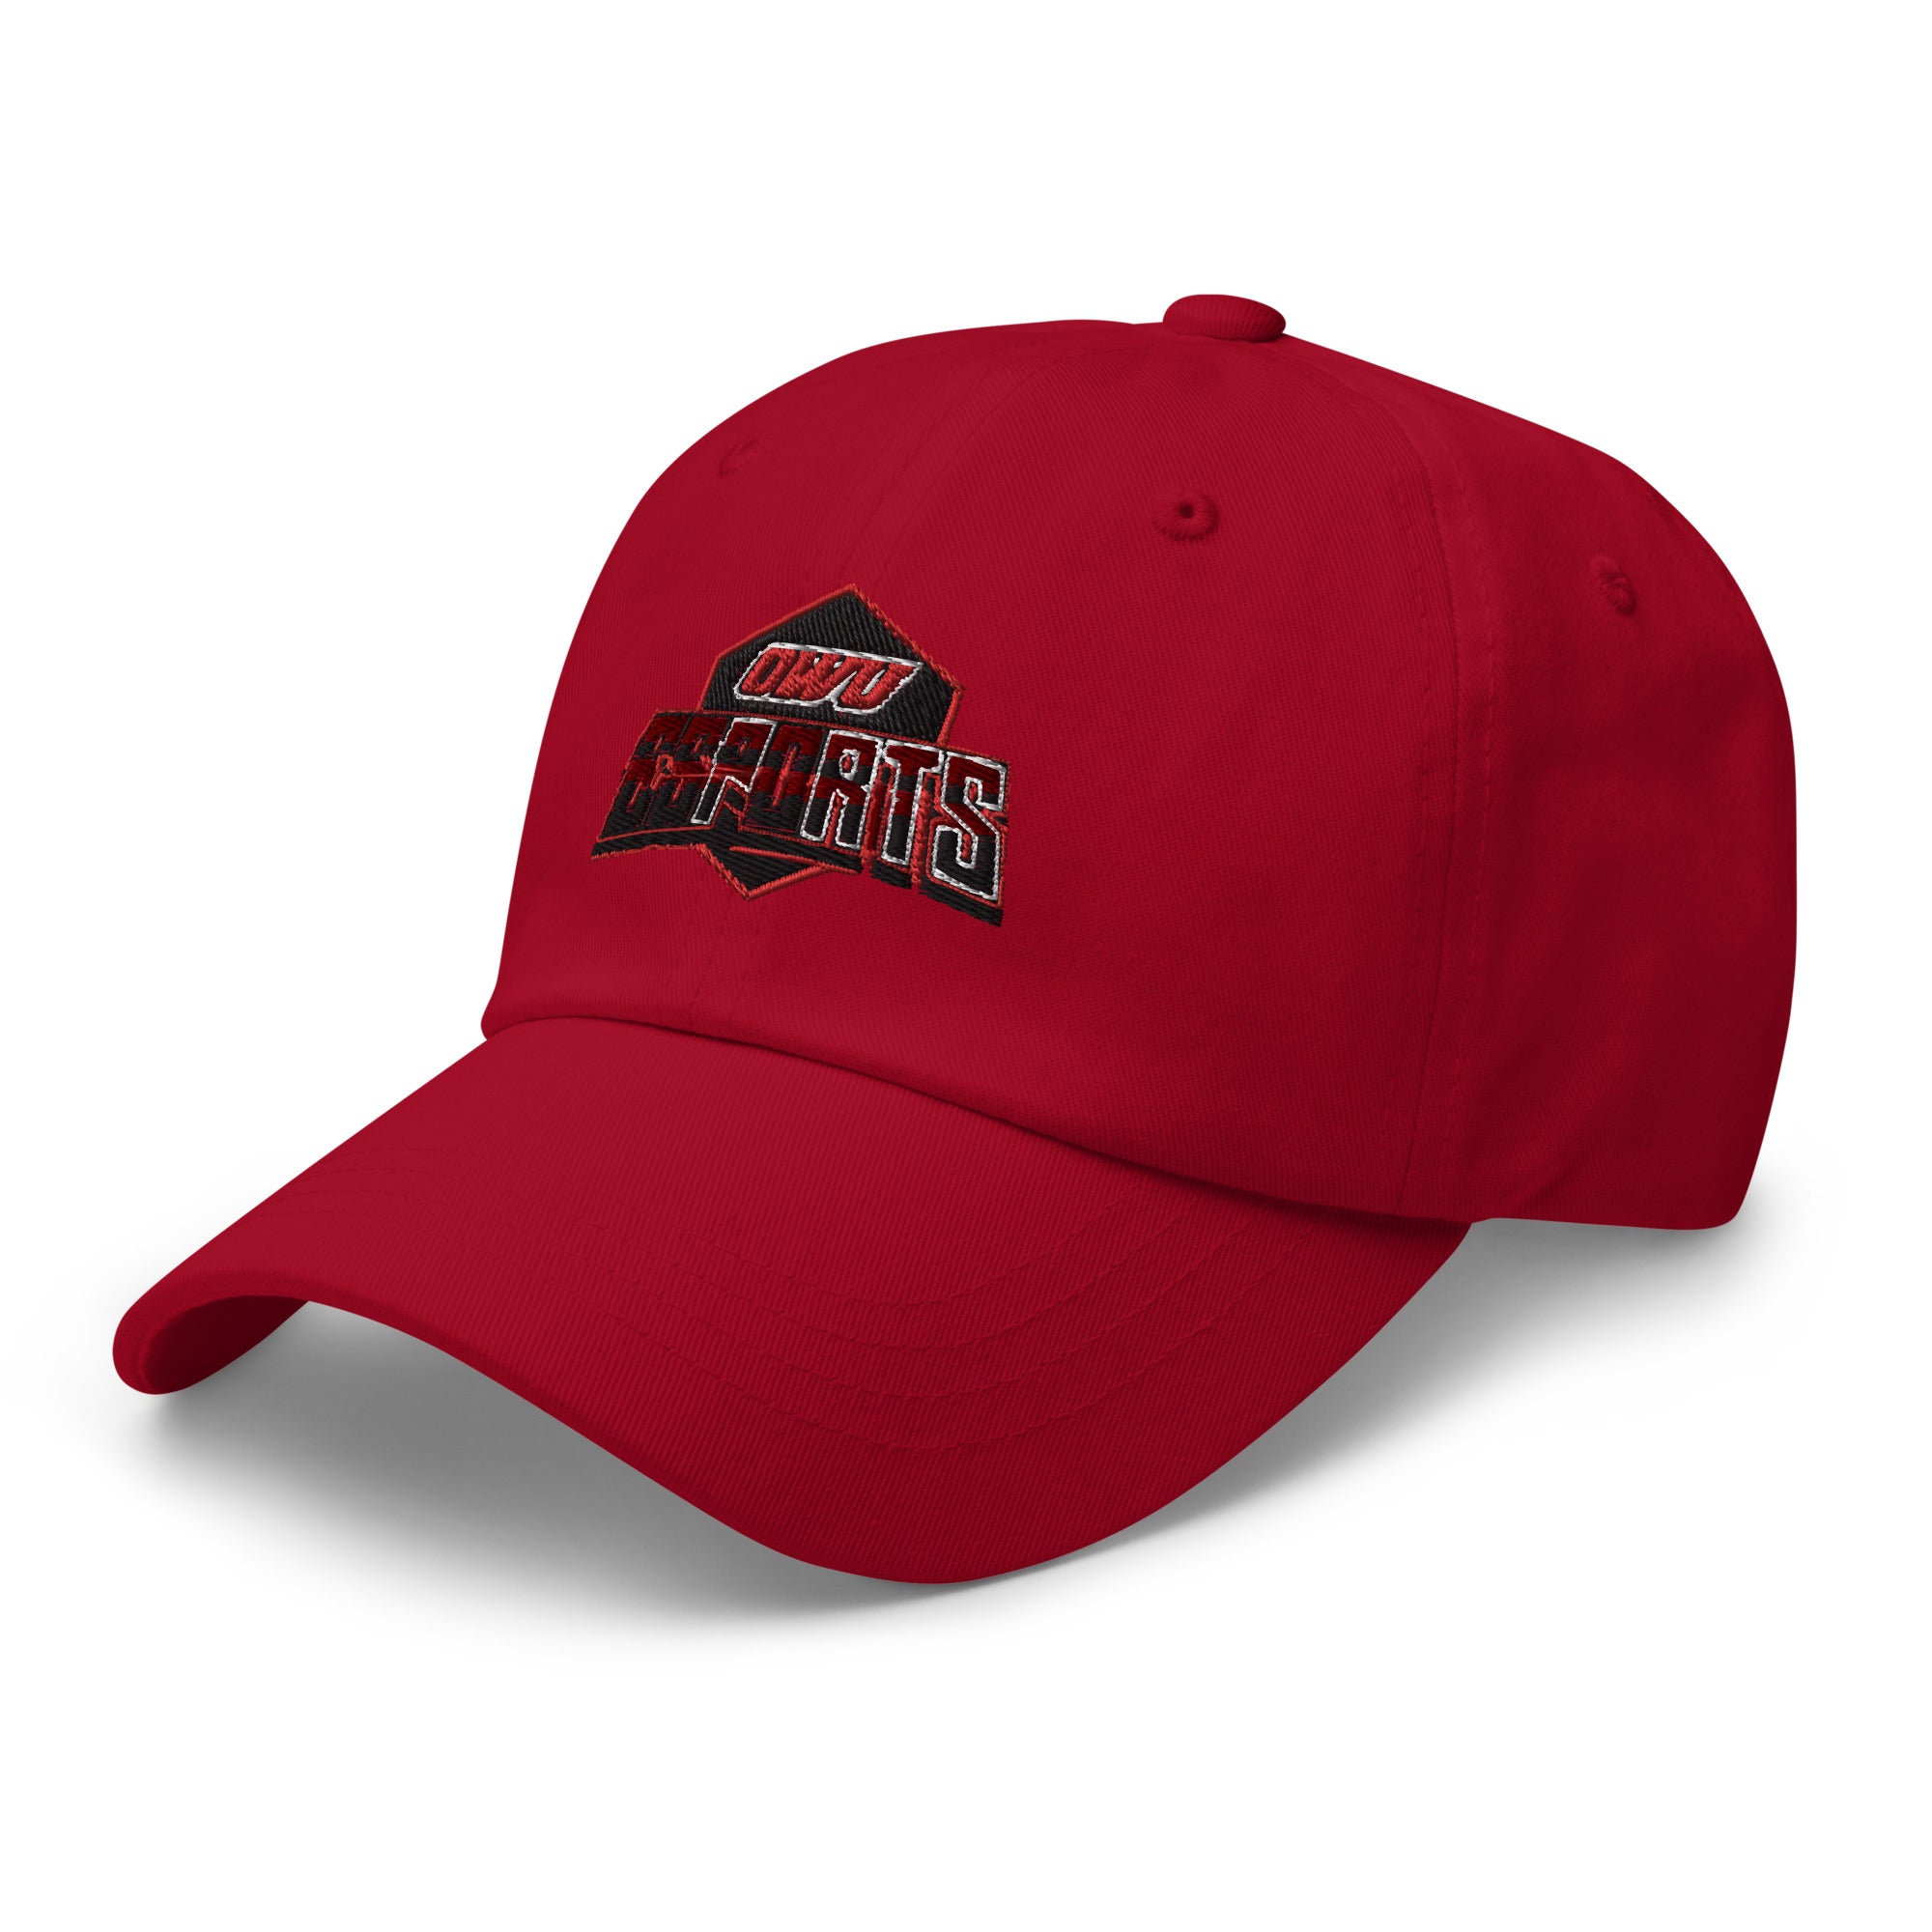 Ohio Wesleyan University | On Demand | Embroidered Dad Hat